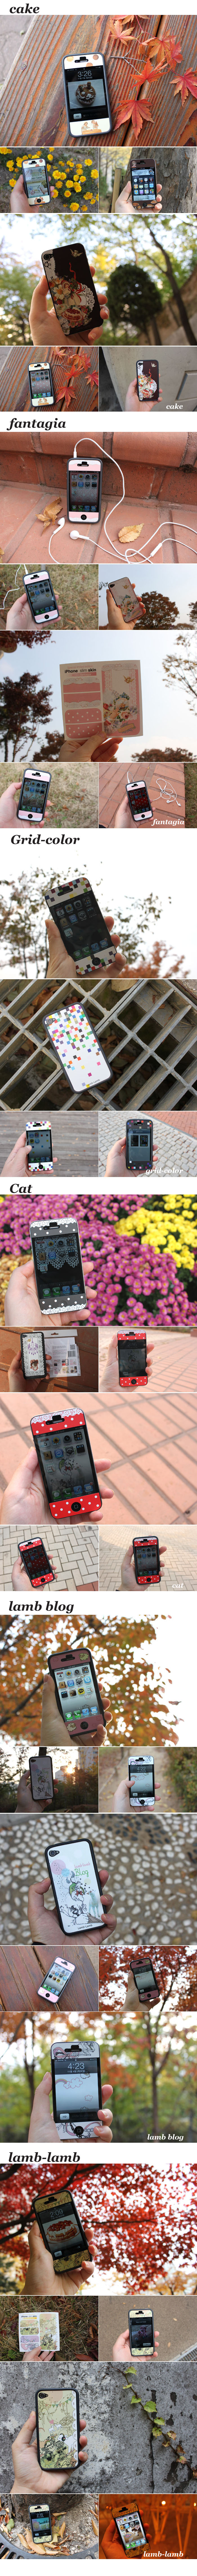 iPhone 4G skin -movie 5,800원 - 램램 디지털, 모바일 액세서리, 보호필름, 애플 바보사랑 iPhone 4G skin -movie 5,800원 - 램램 디지털, 모바일 액세서리, 보호필름, 애플 바보사랑